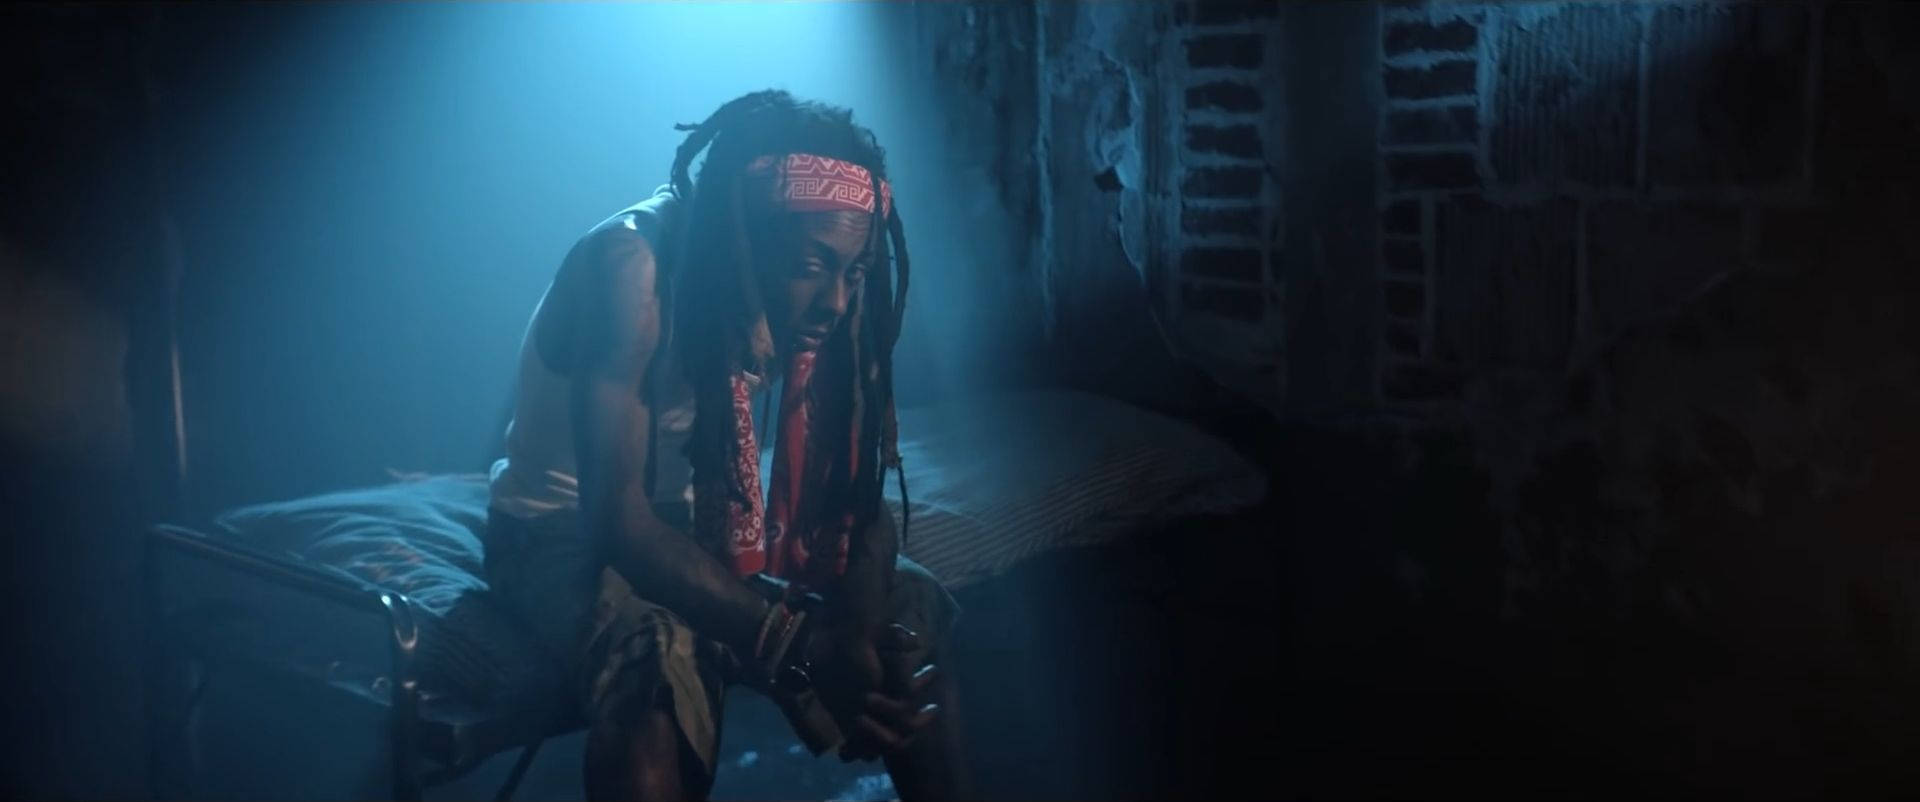 Lil Wayne - The Prodigy Of Rap Music Wallpaper